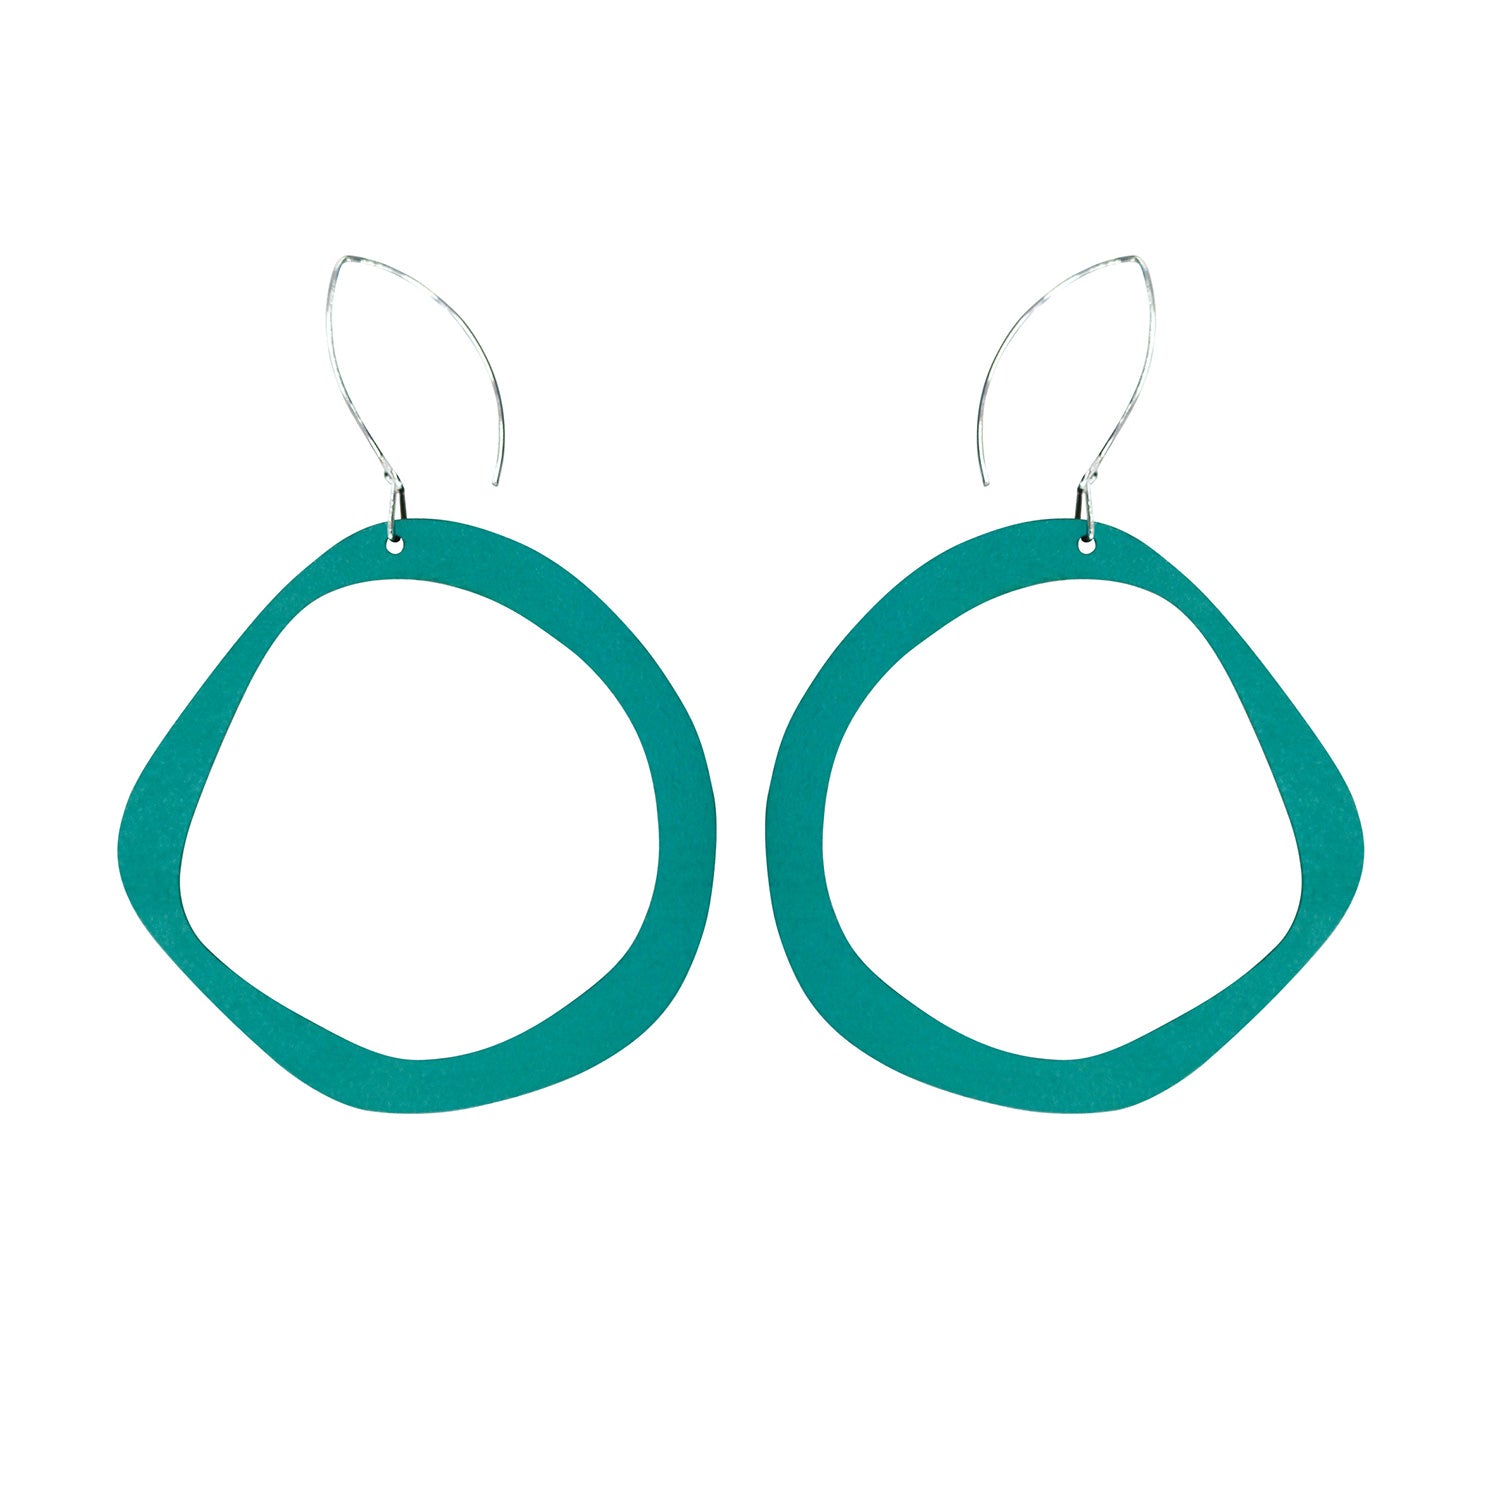 Retro hoop statement earrings in aqua